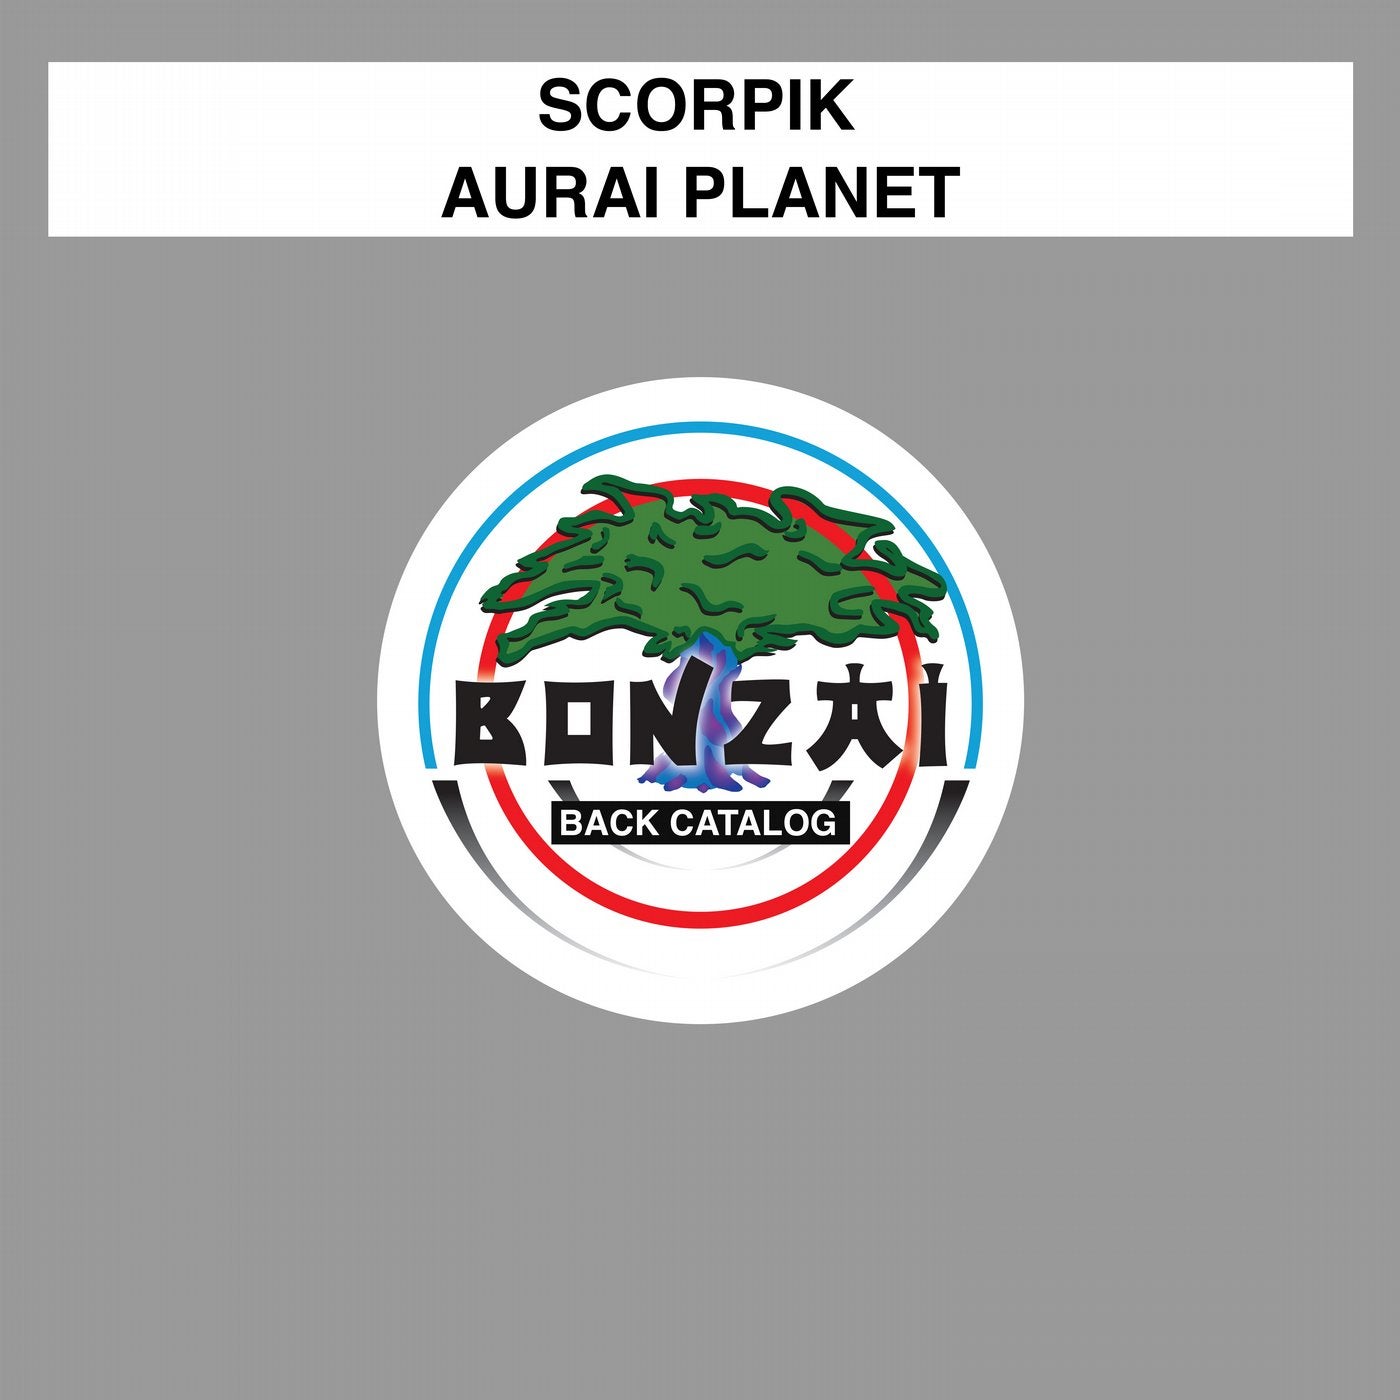 Aural Planet